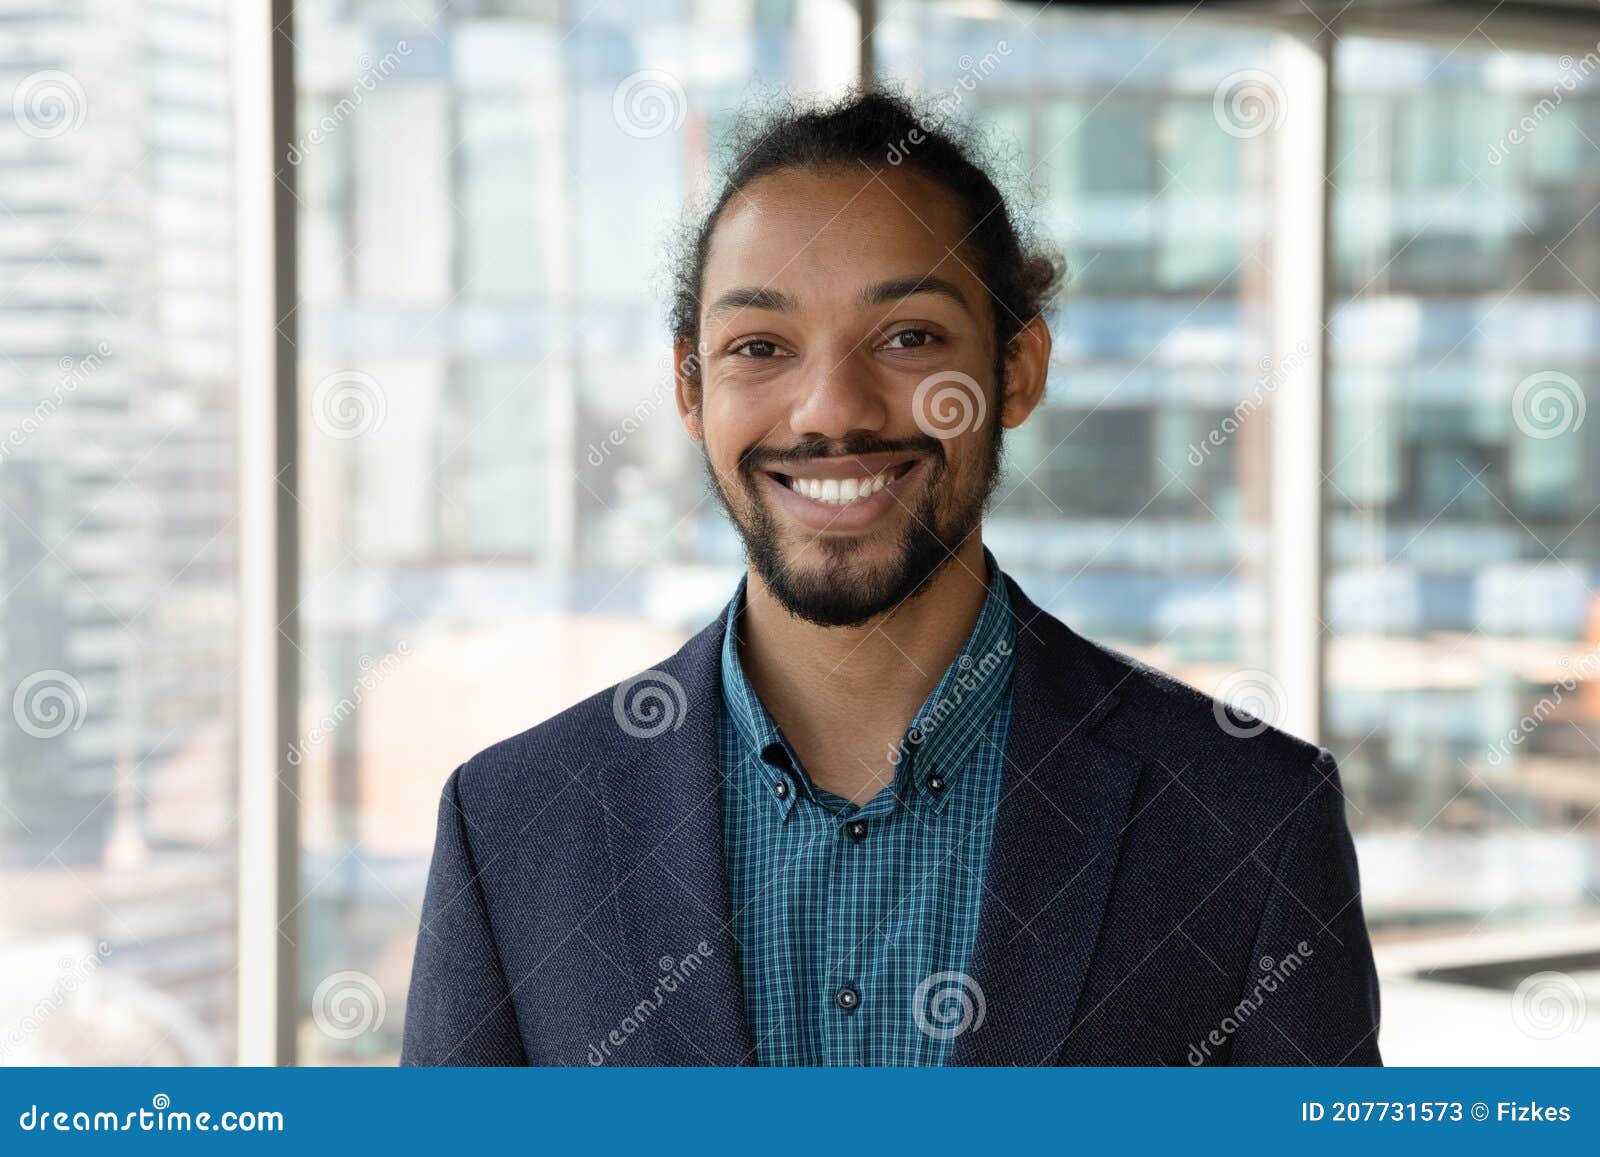 headshot portrait of smiling ethnic businessman in office